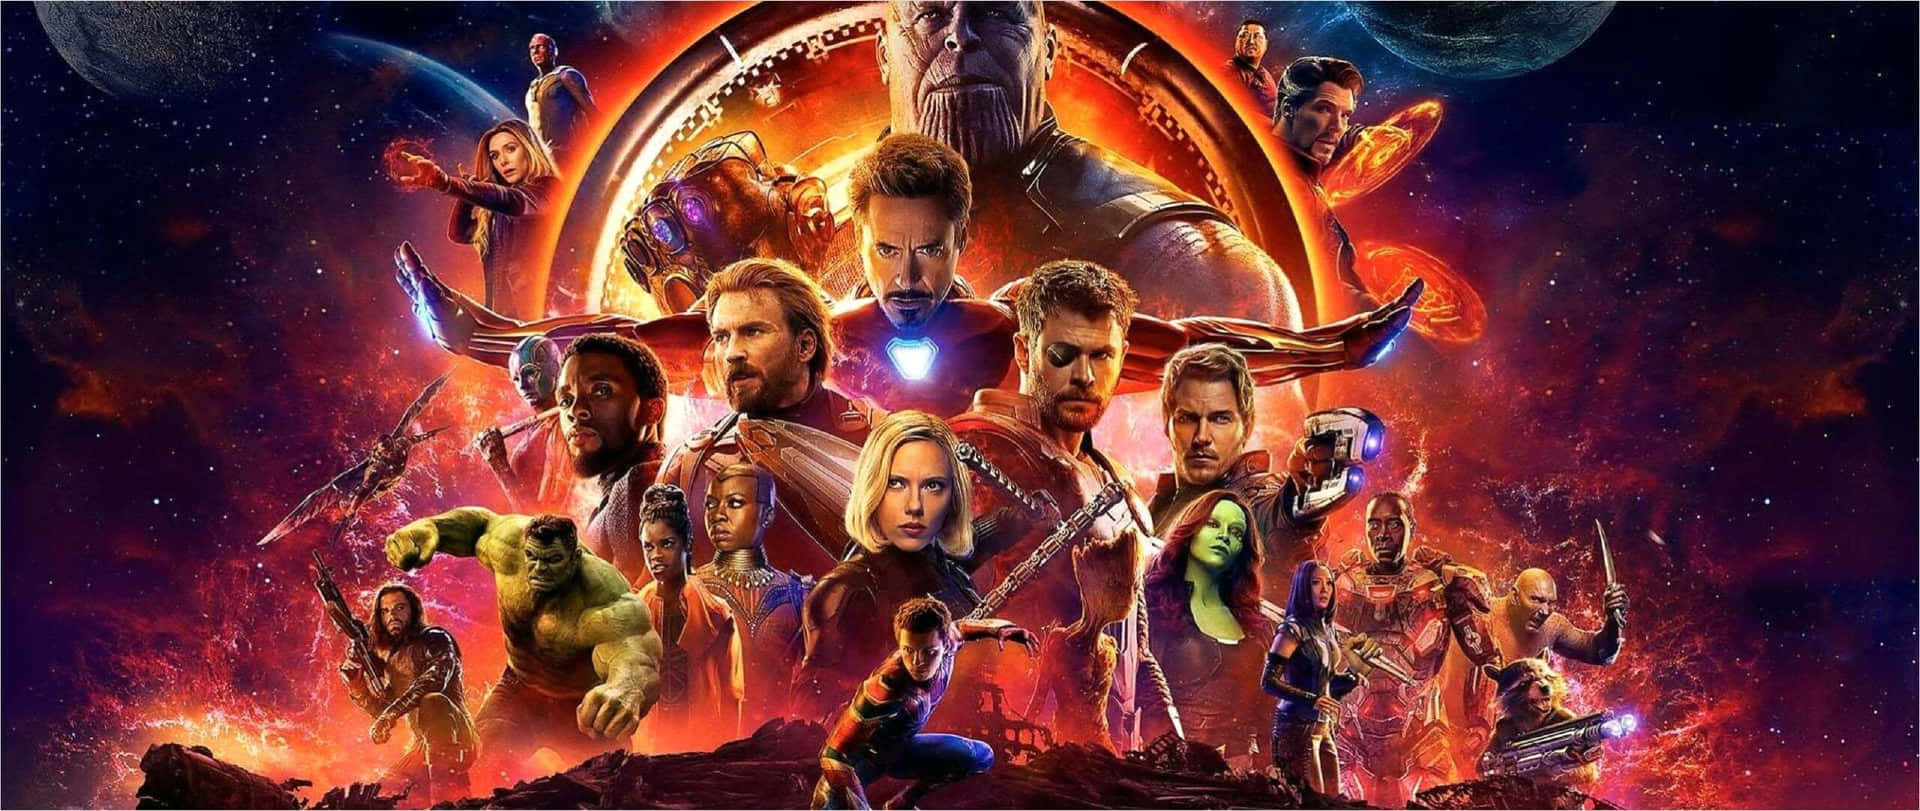 Avengersinfinity War Poster Med Många Karaktärer. Wallpaper